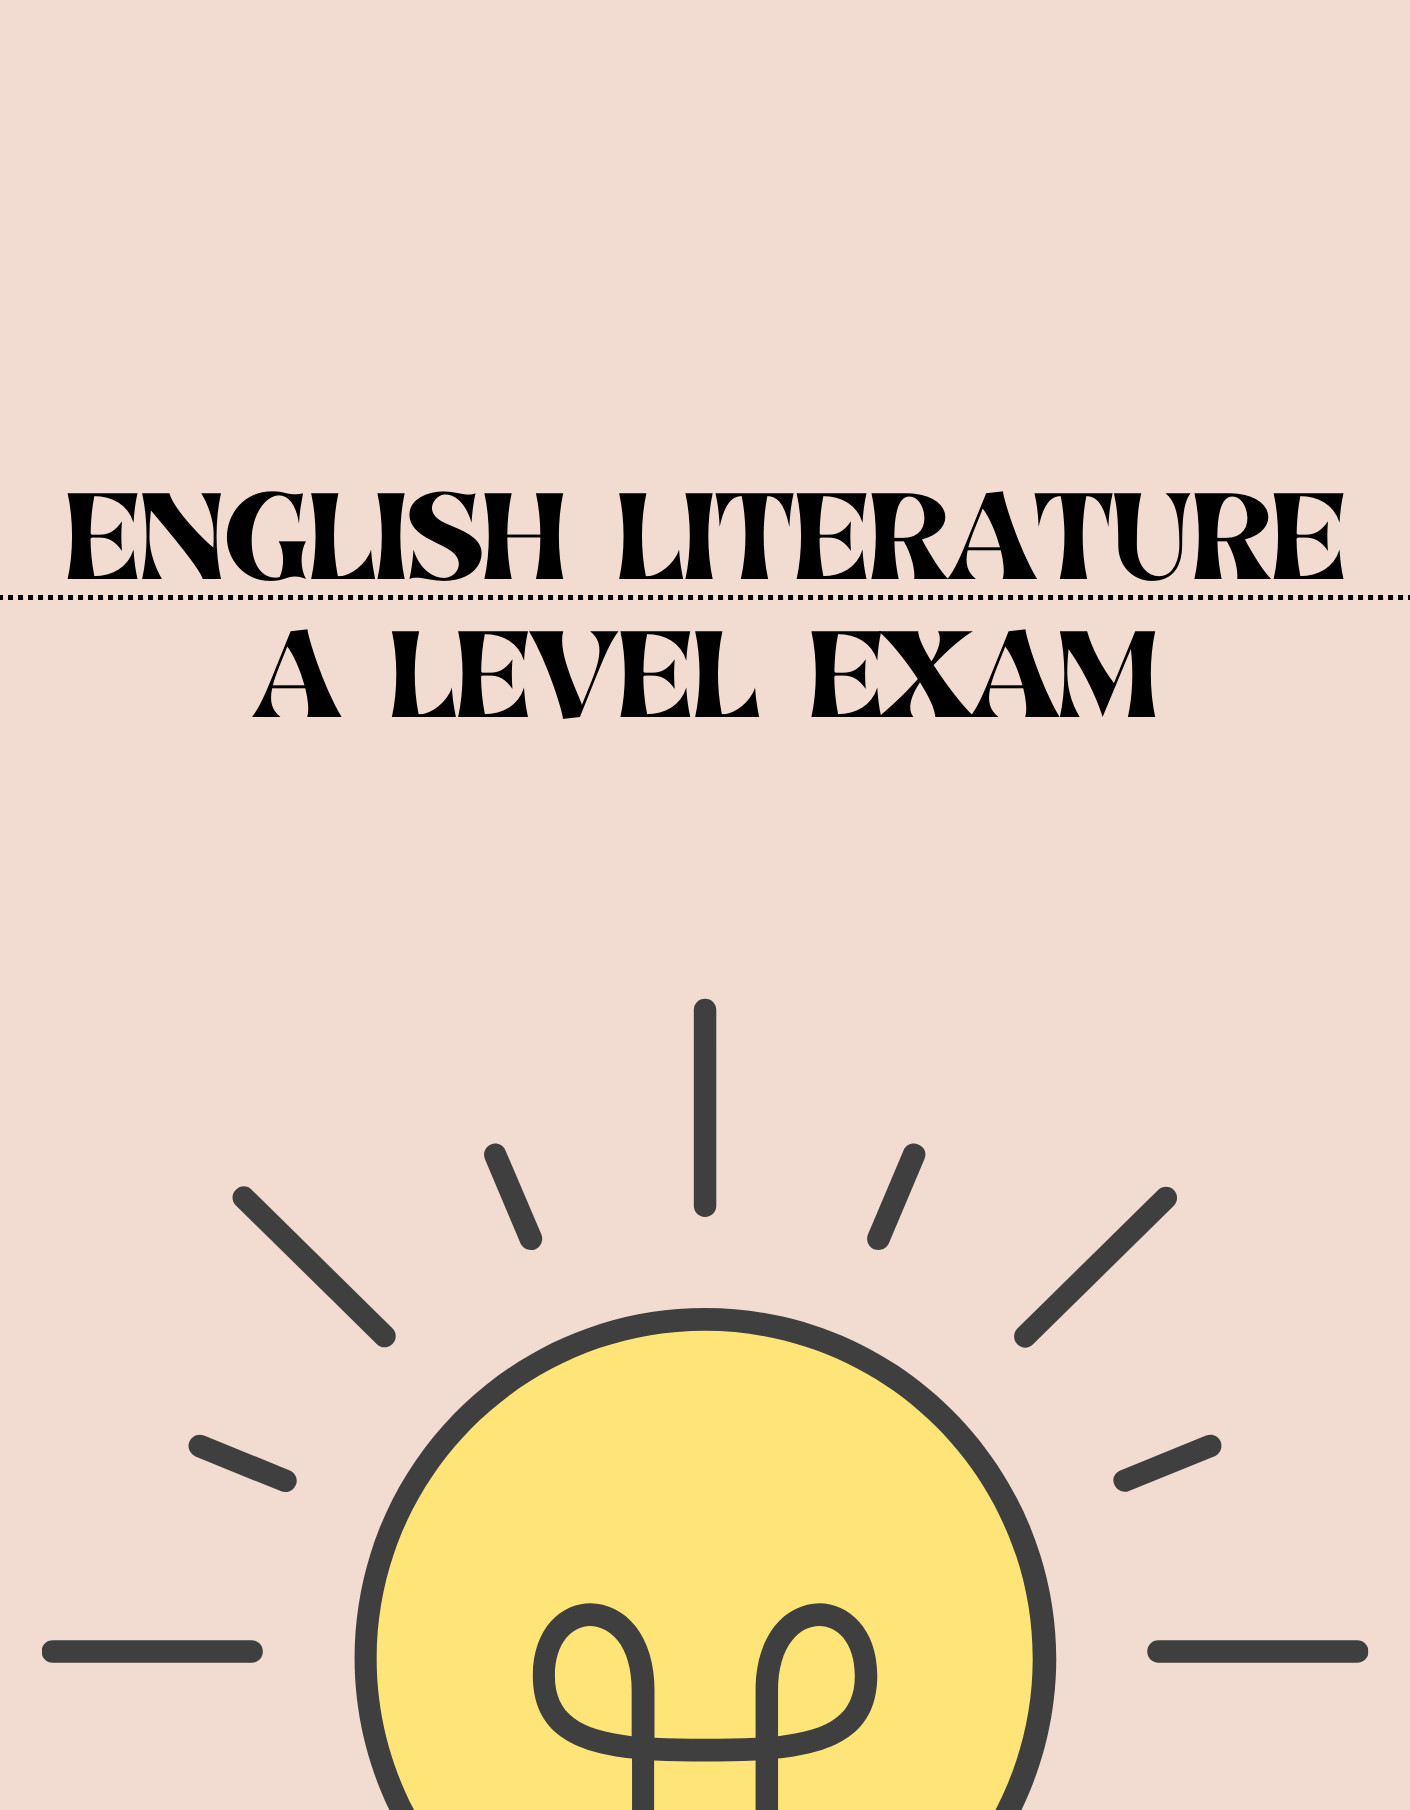 A Level - English Literature Exam - Exam Centre Birmingham Limited